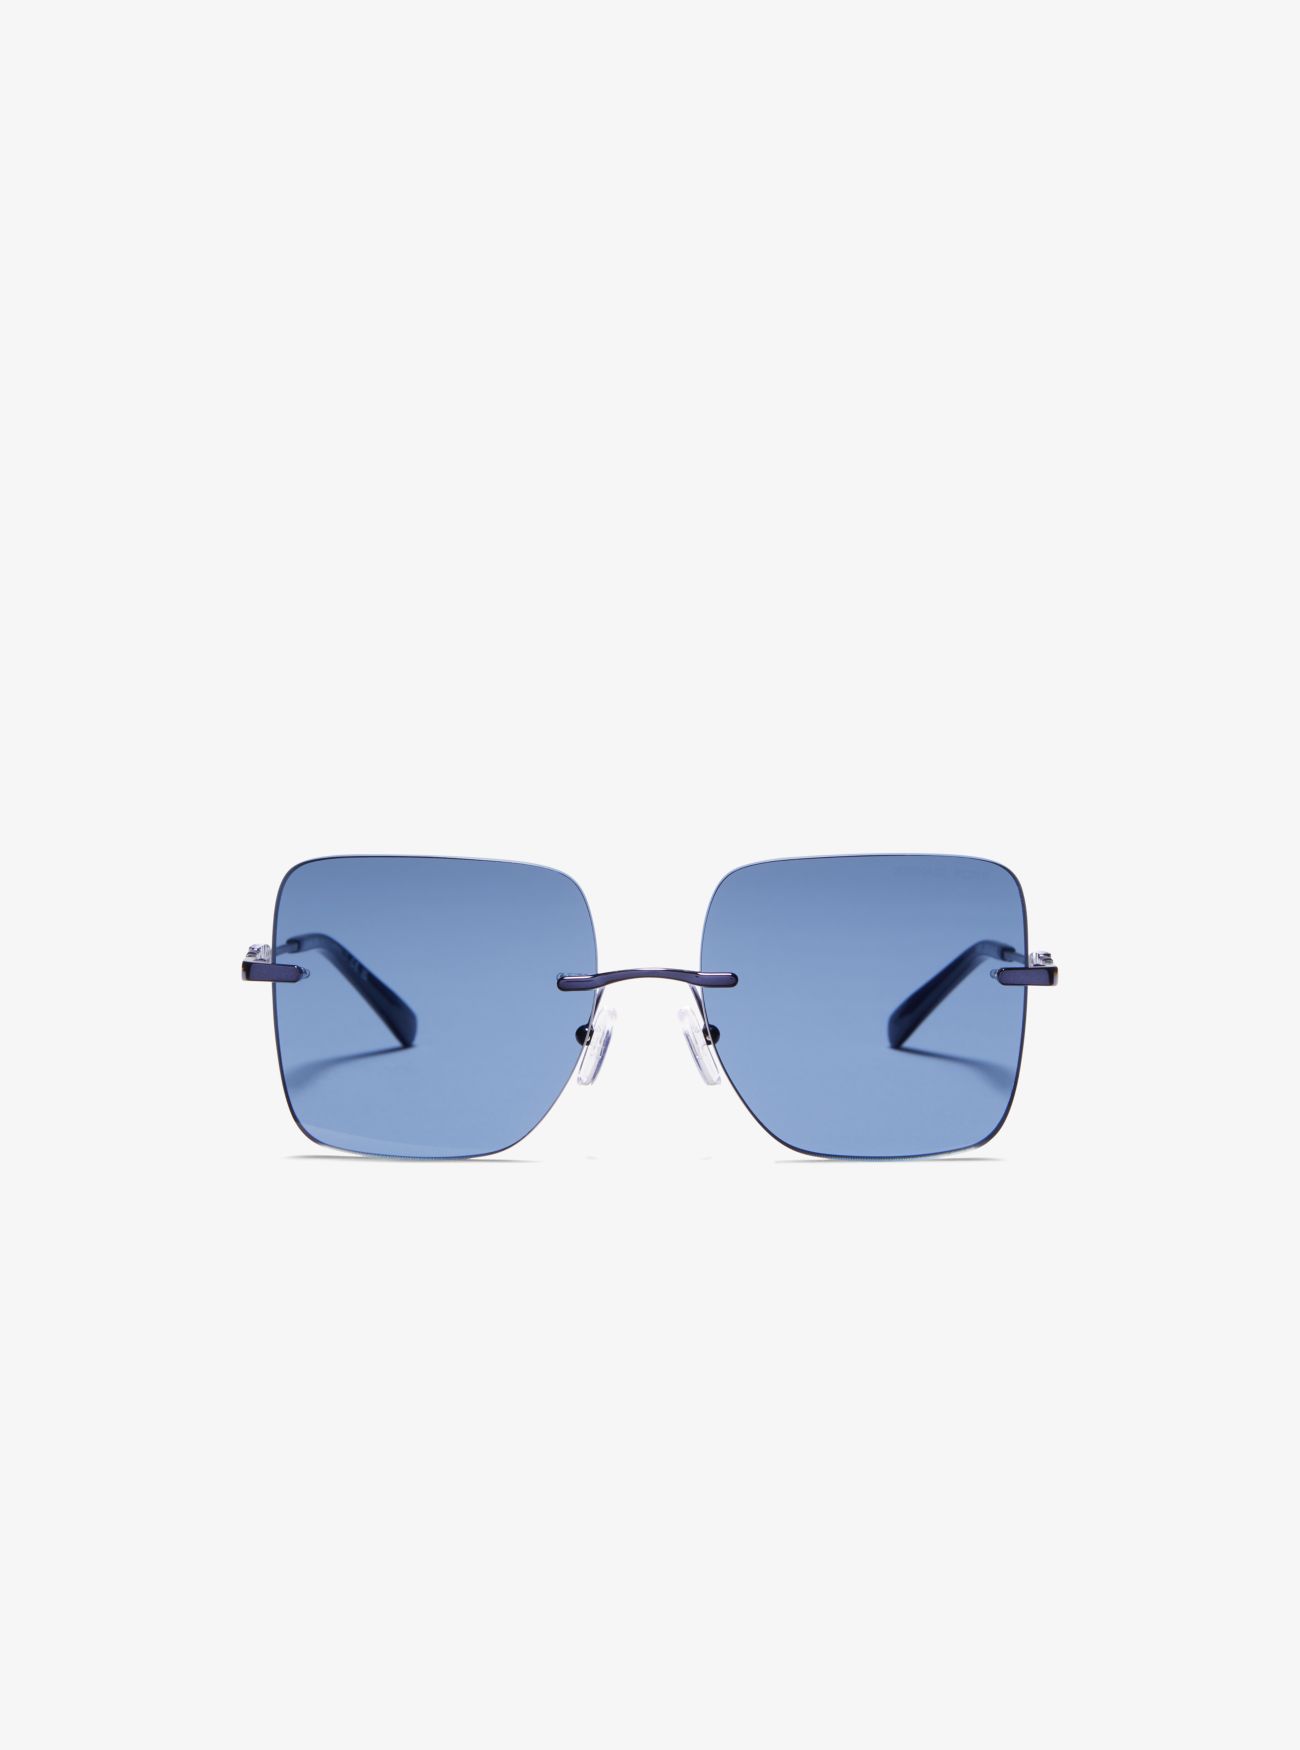 MK Quebec Sunglasses - Blue - Michael Kors